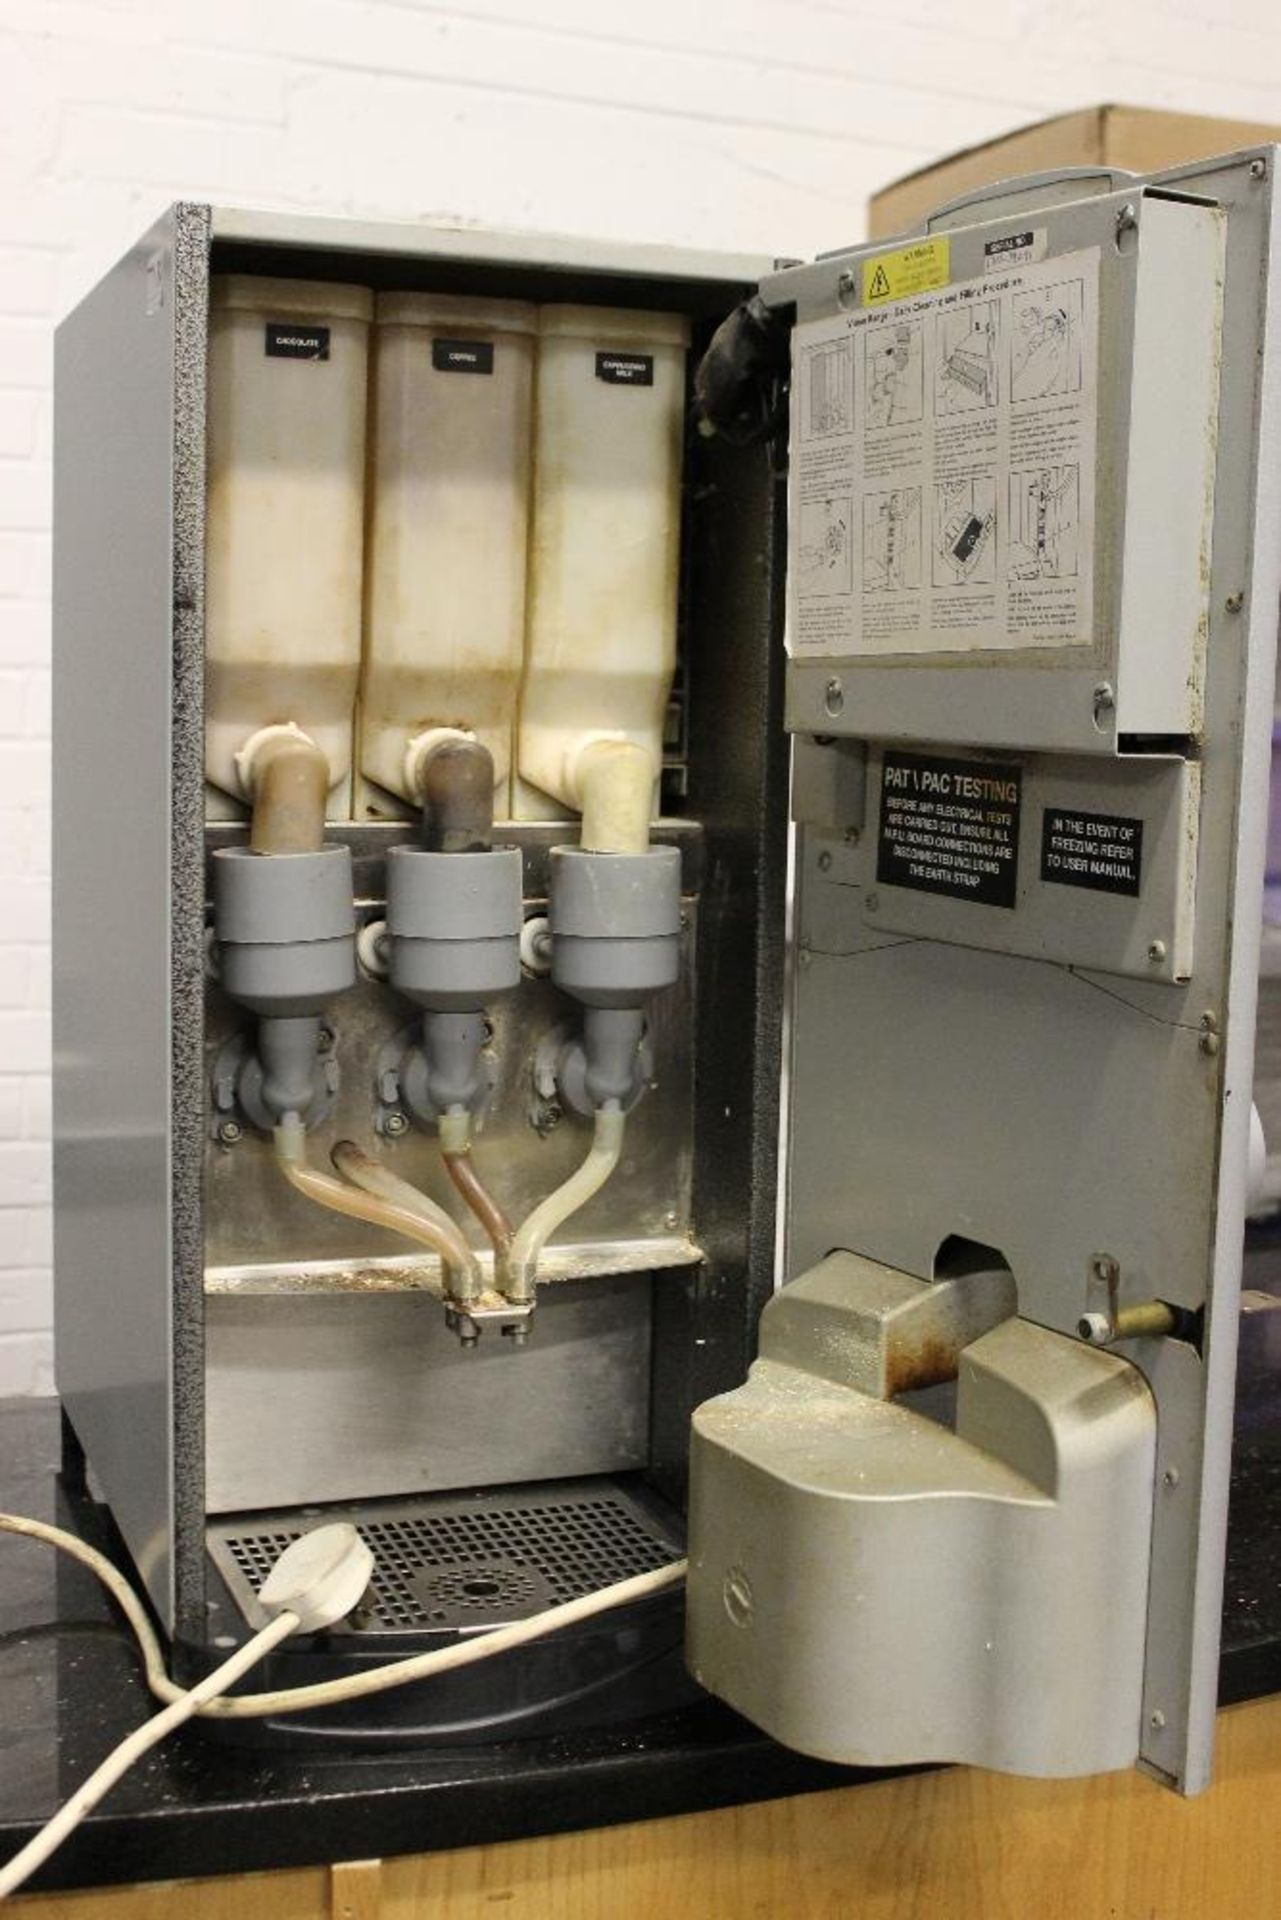 Milko Coffee / Chocolate Drinks Vending Machine - Tested Working - Image 2 of 2